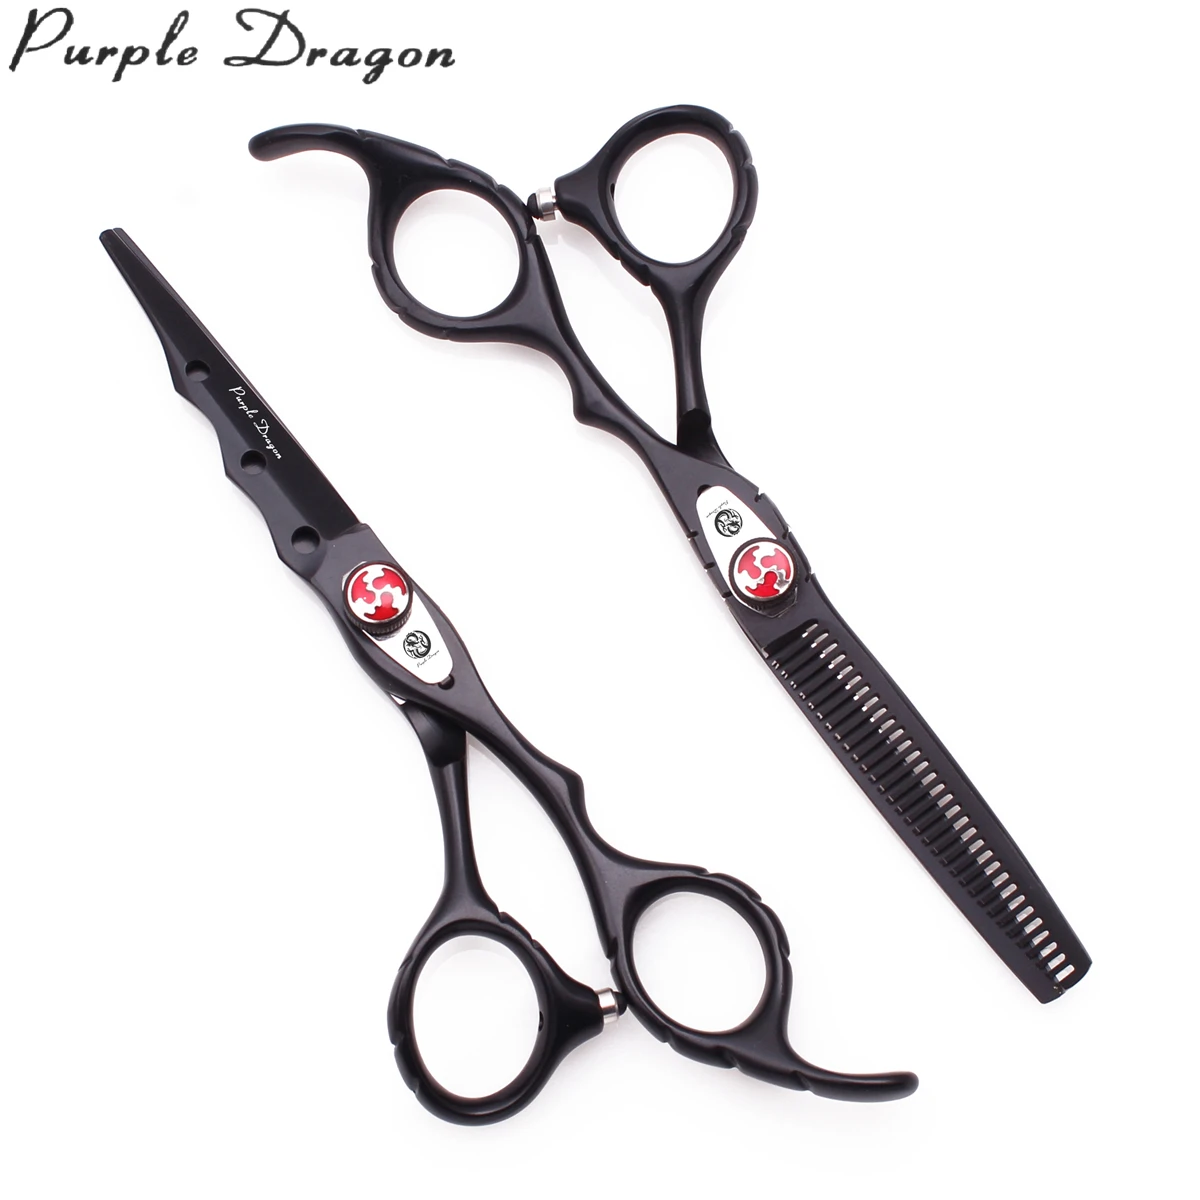 purple dragon scissors set